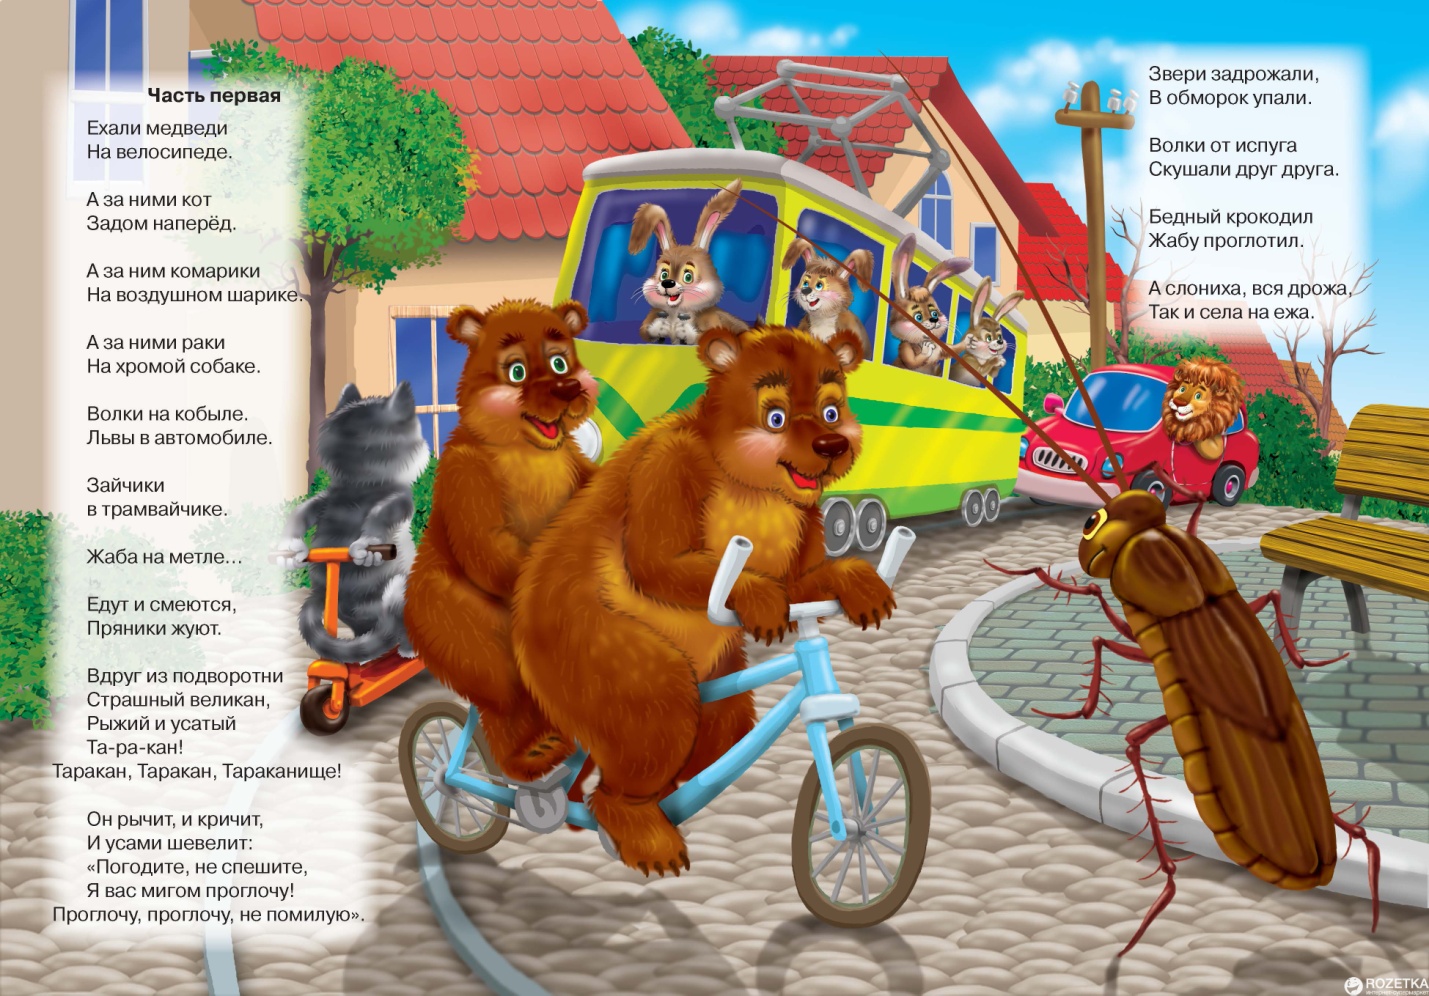 Тараканище ехали медведи на велосипеде. Ехали медведи на велосипеде Чуковский. Стих Чуковского ехали медведи. Чуковский иллюстрации ехали медведи.